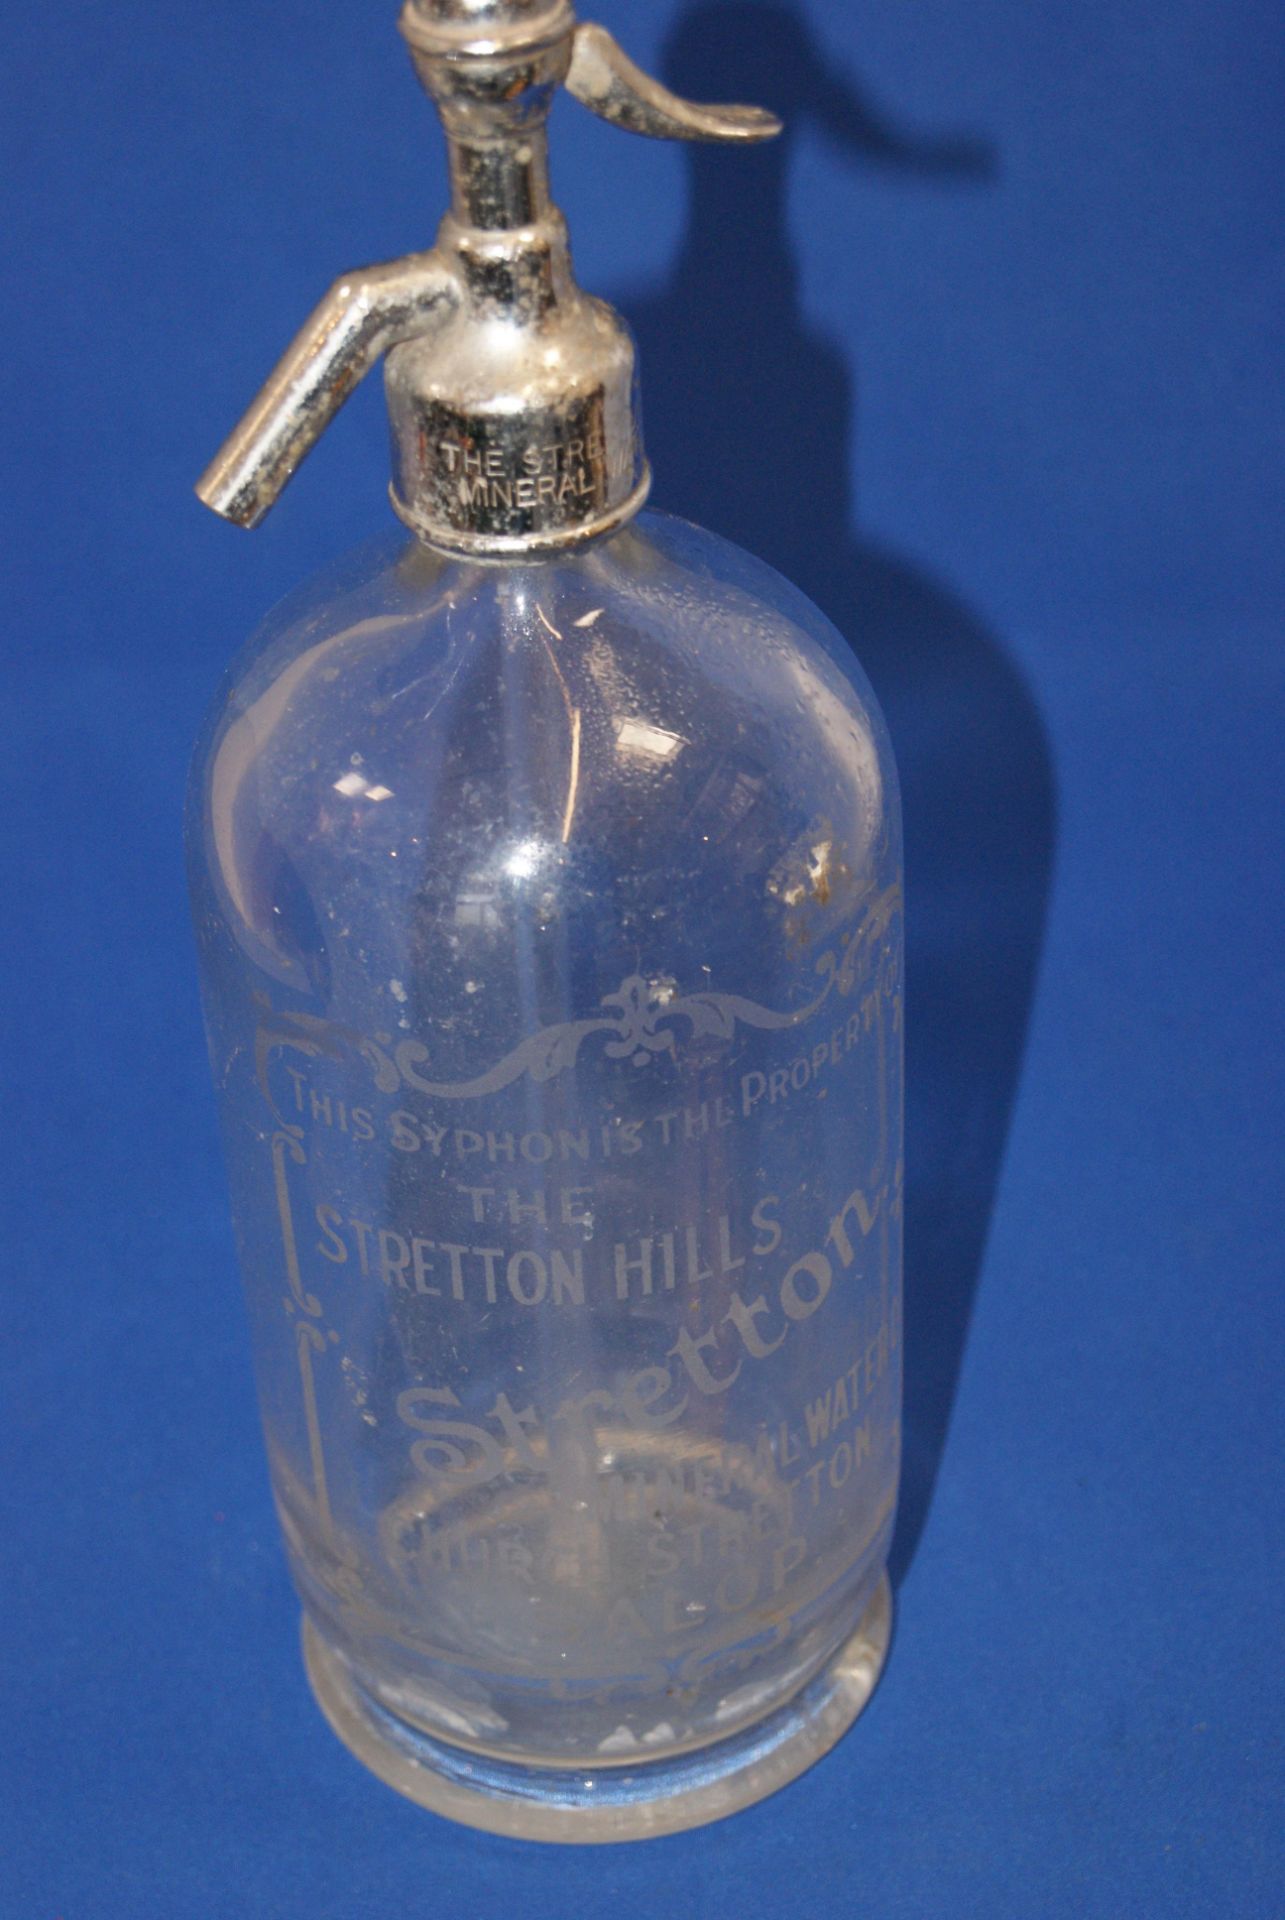 Vintage Soda Syphon Bottle British Syphon